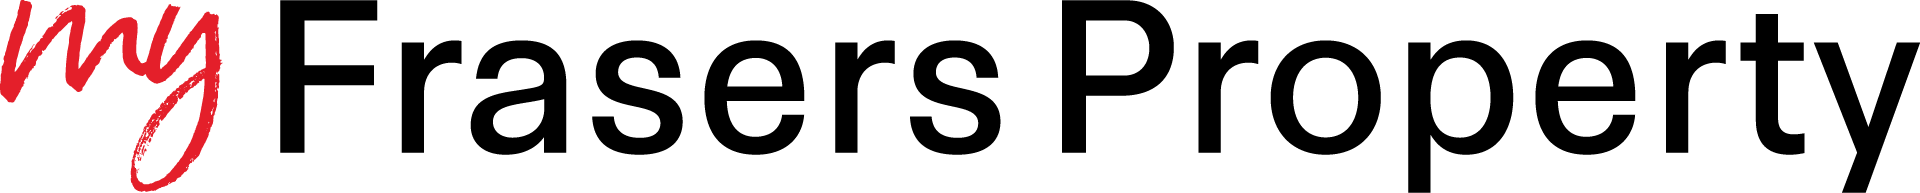 frasers-logo-black